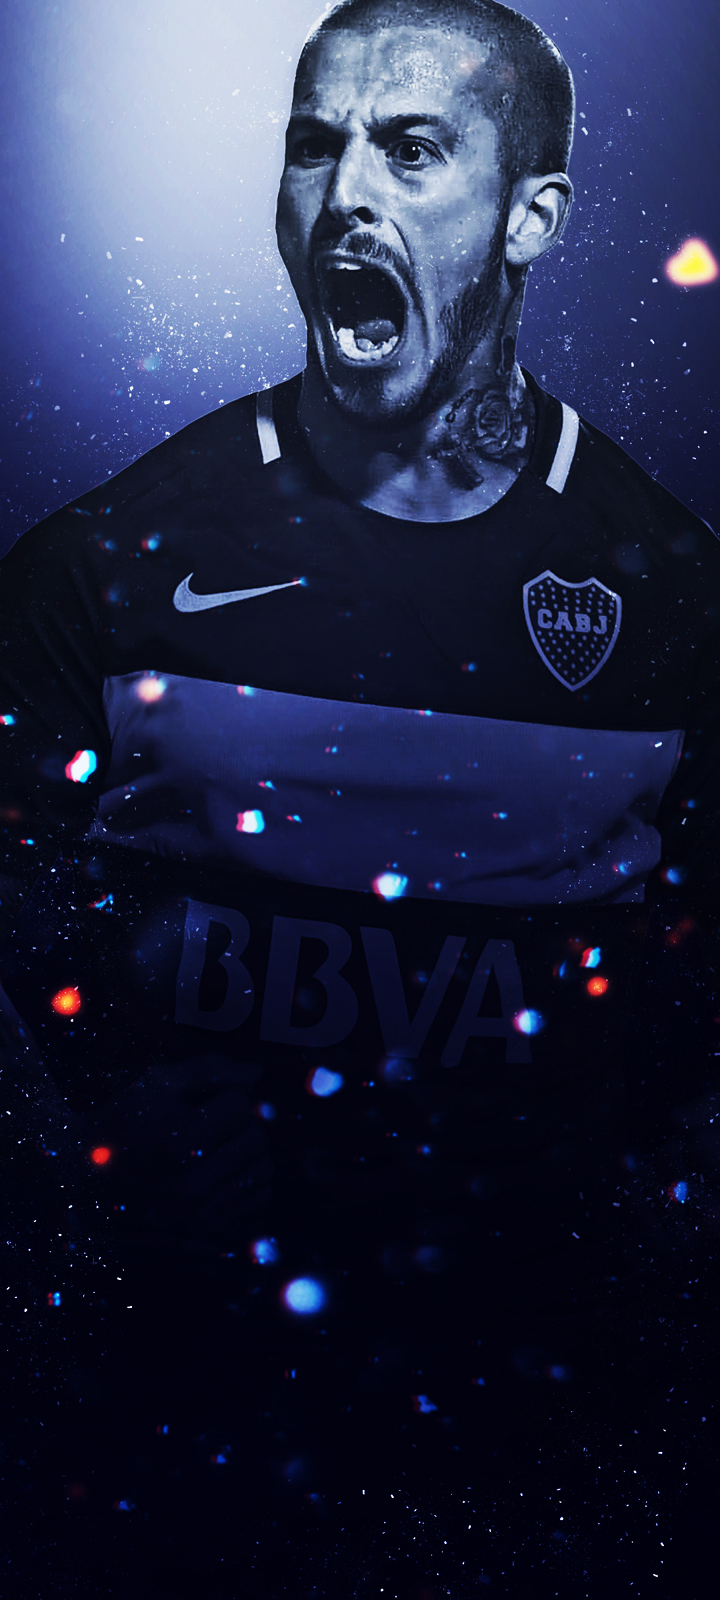 Darío Ismael Benedetto - Boca Juniors